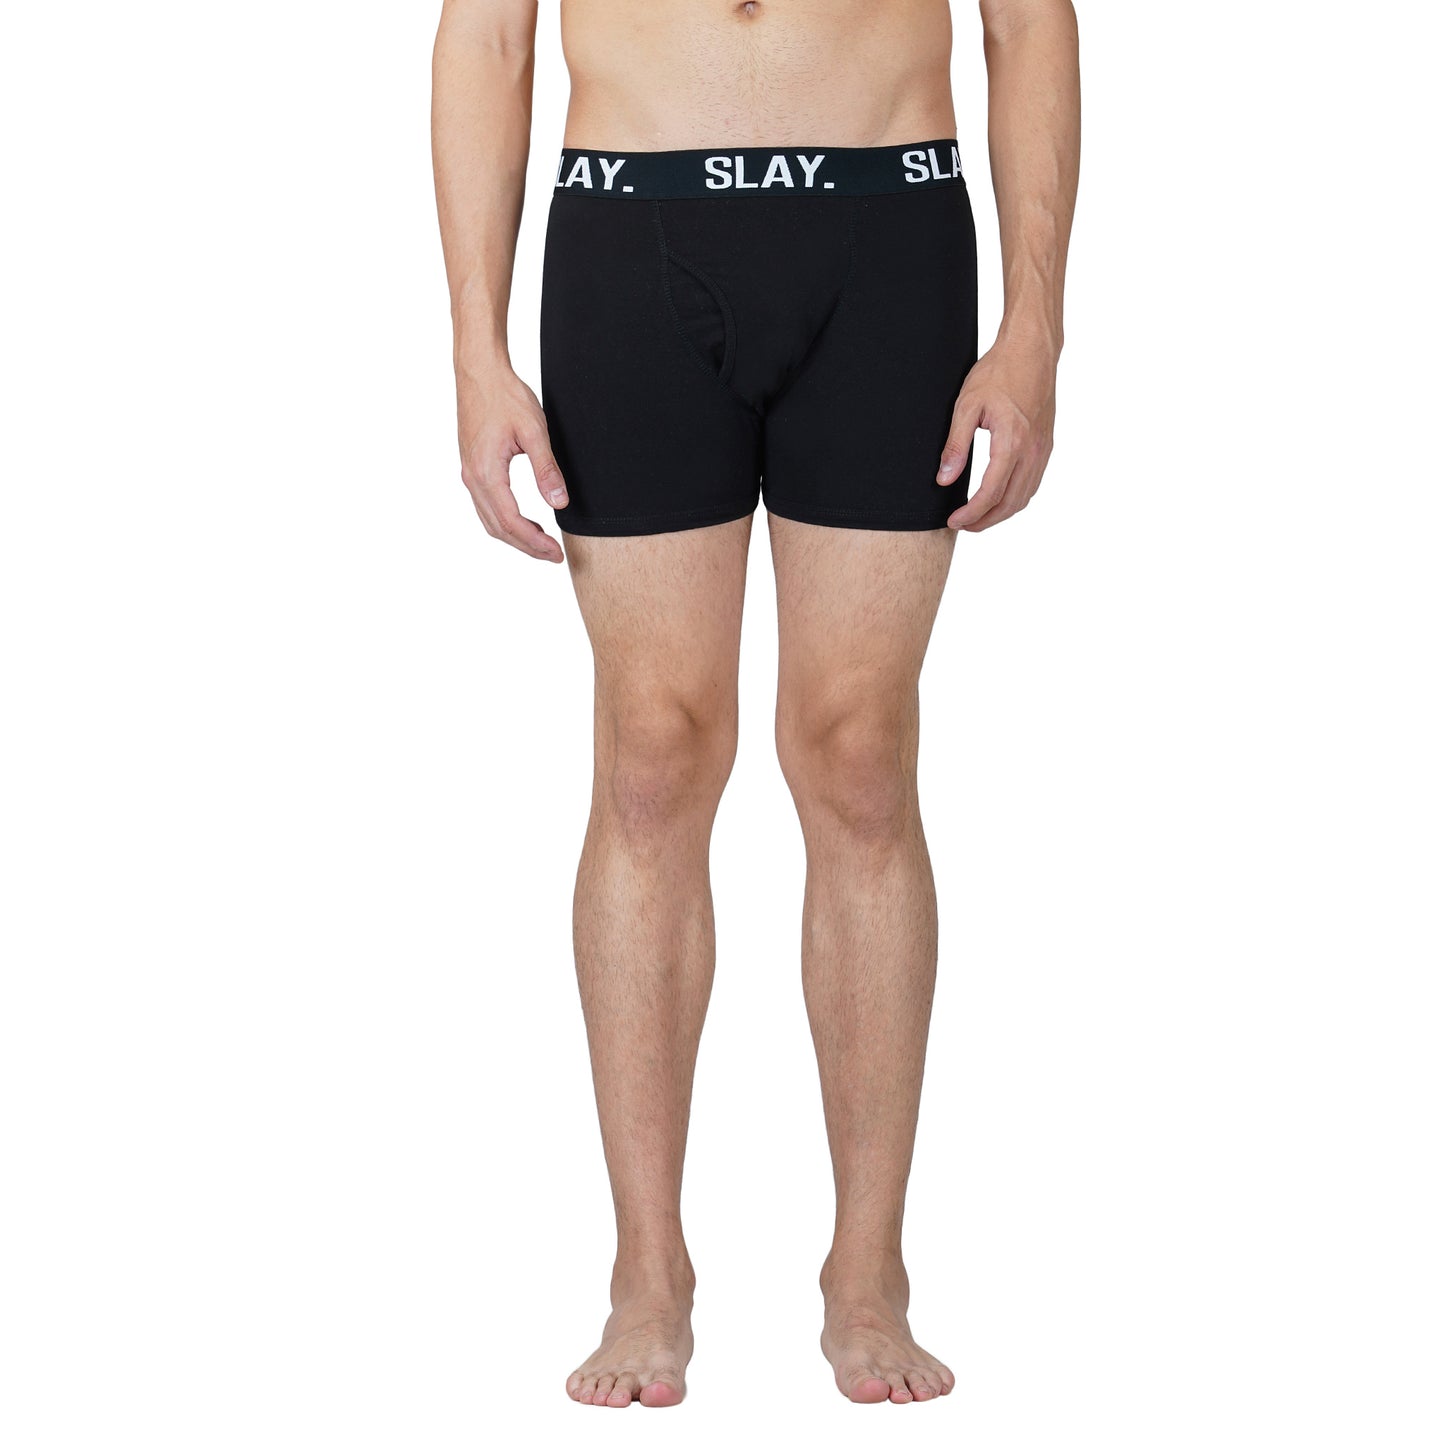 SLAY. Men's Black Underwear Trunks